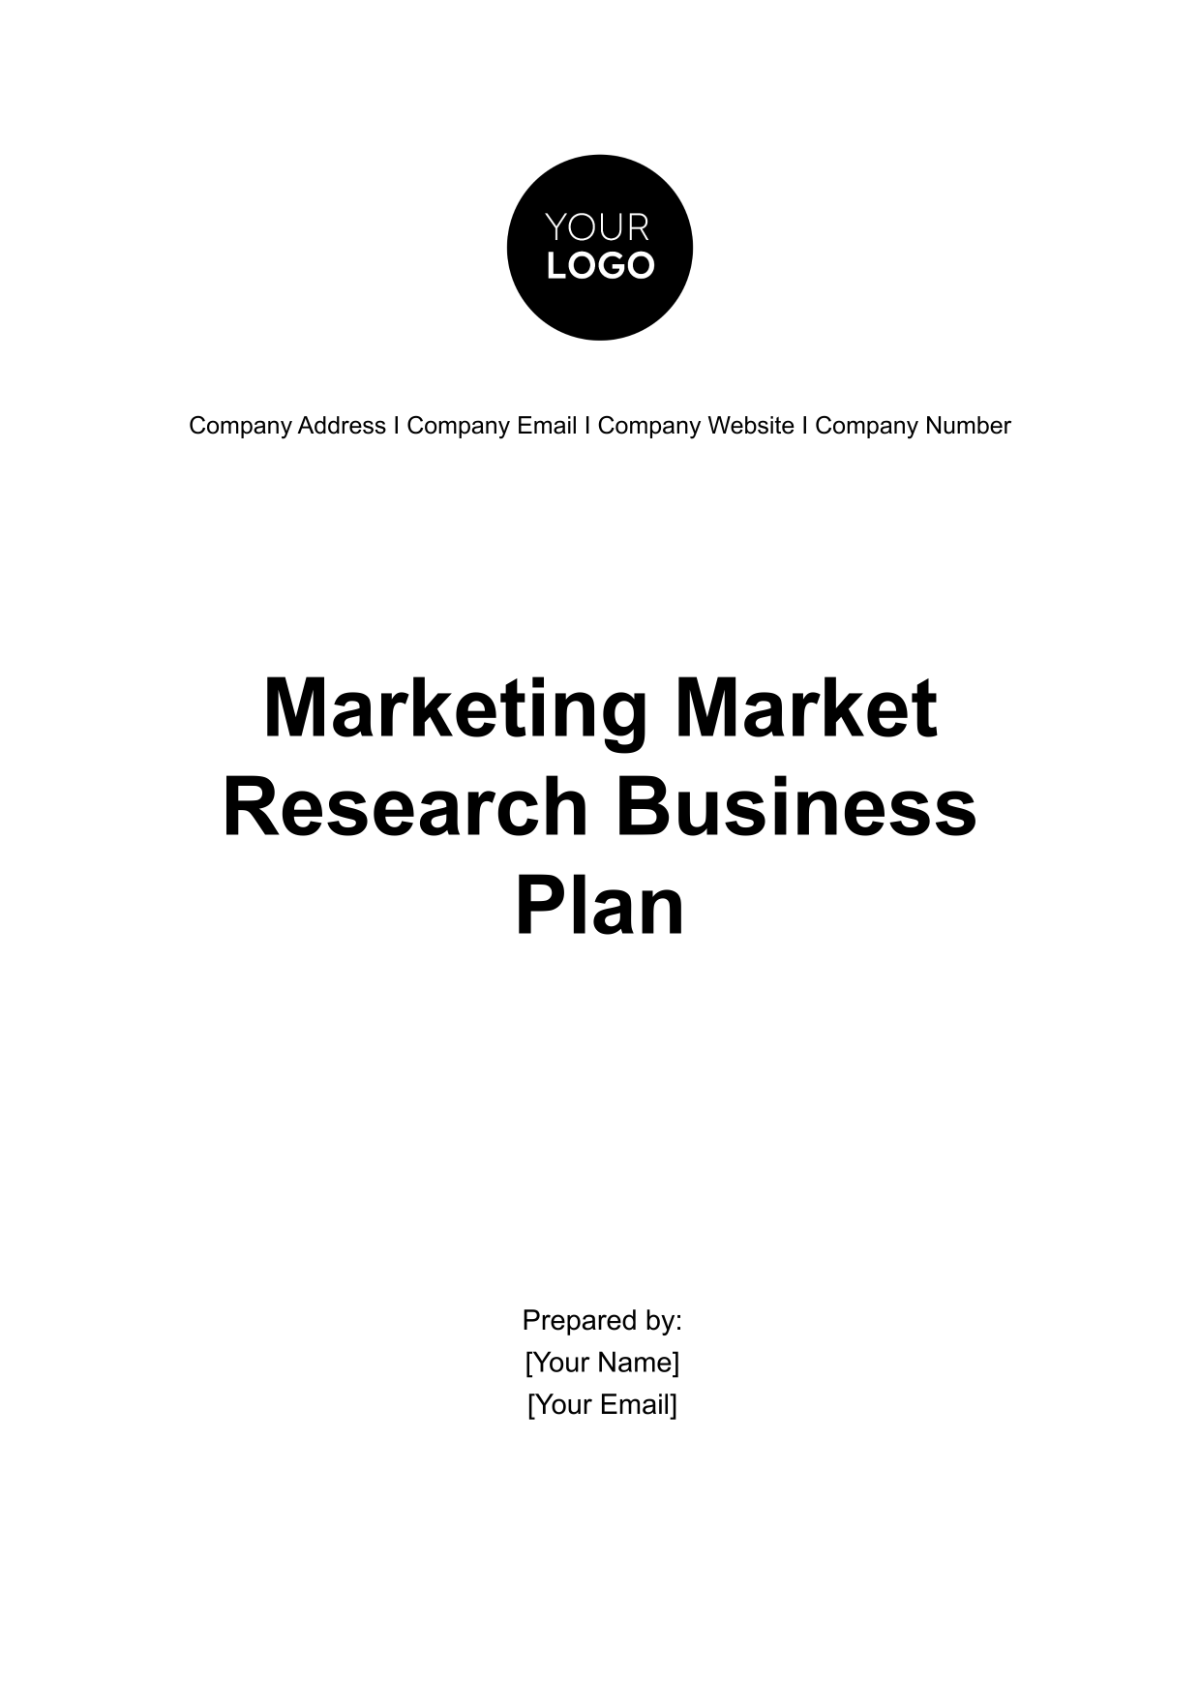 Marketing Market Research Business Plan Template